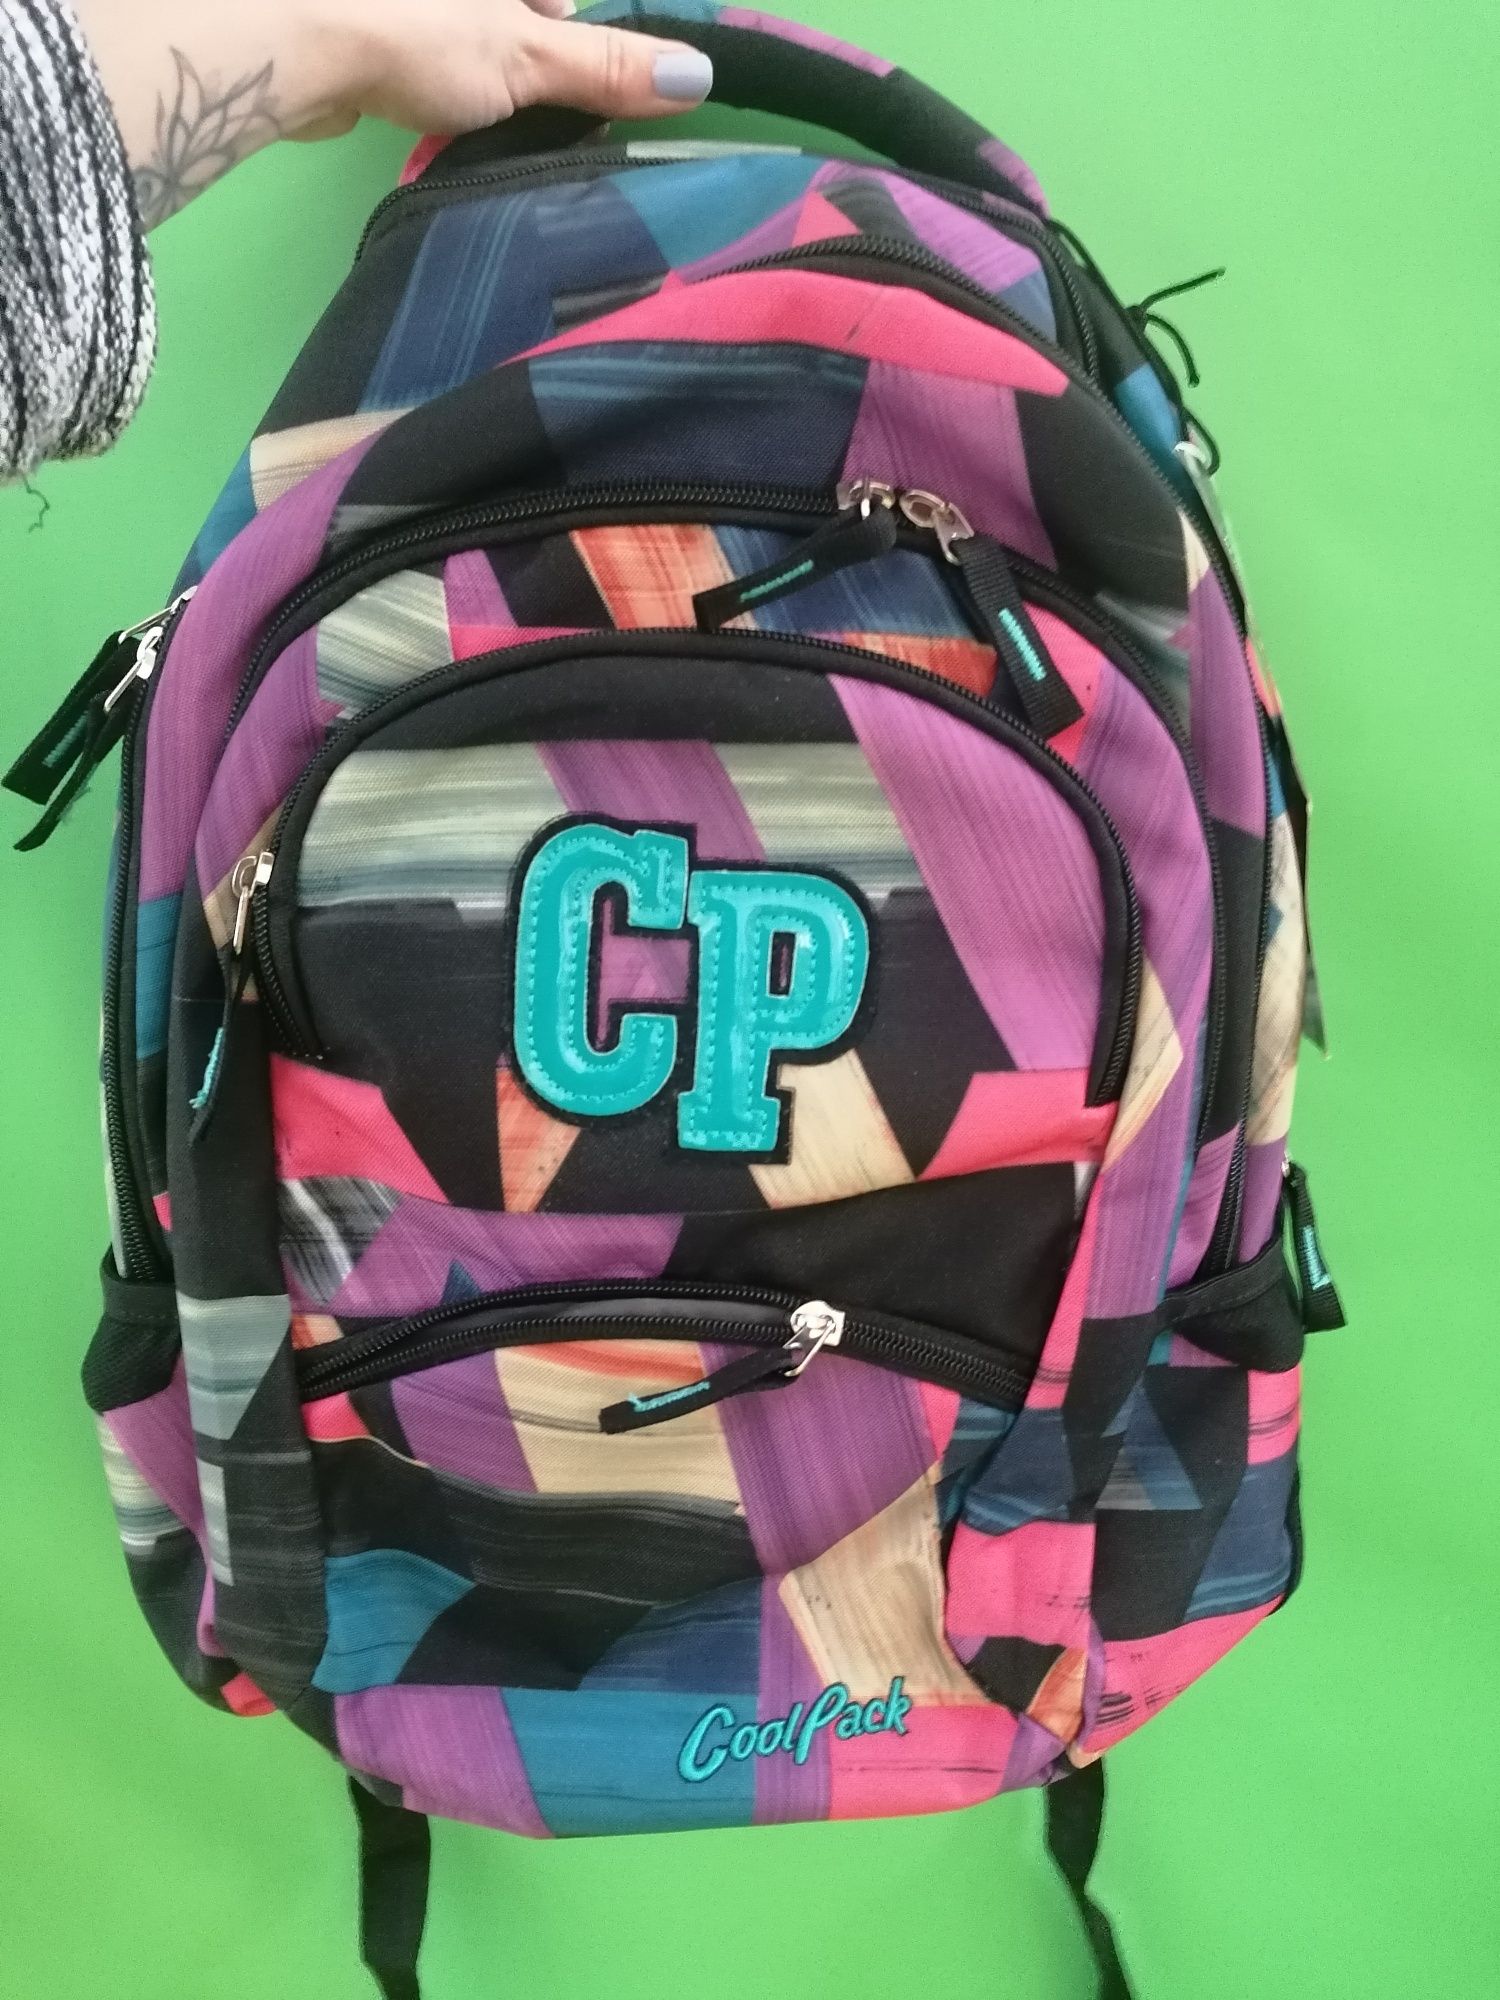 Coolpack Plecak szkolny 2 kolory pojemny